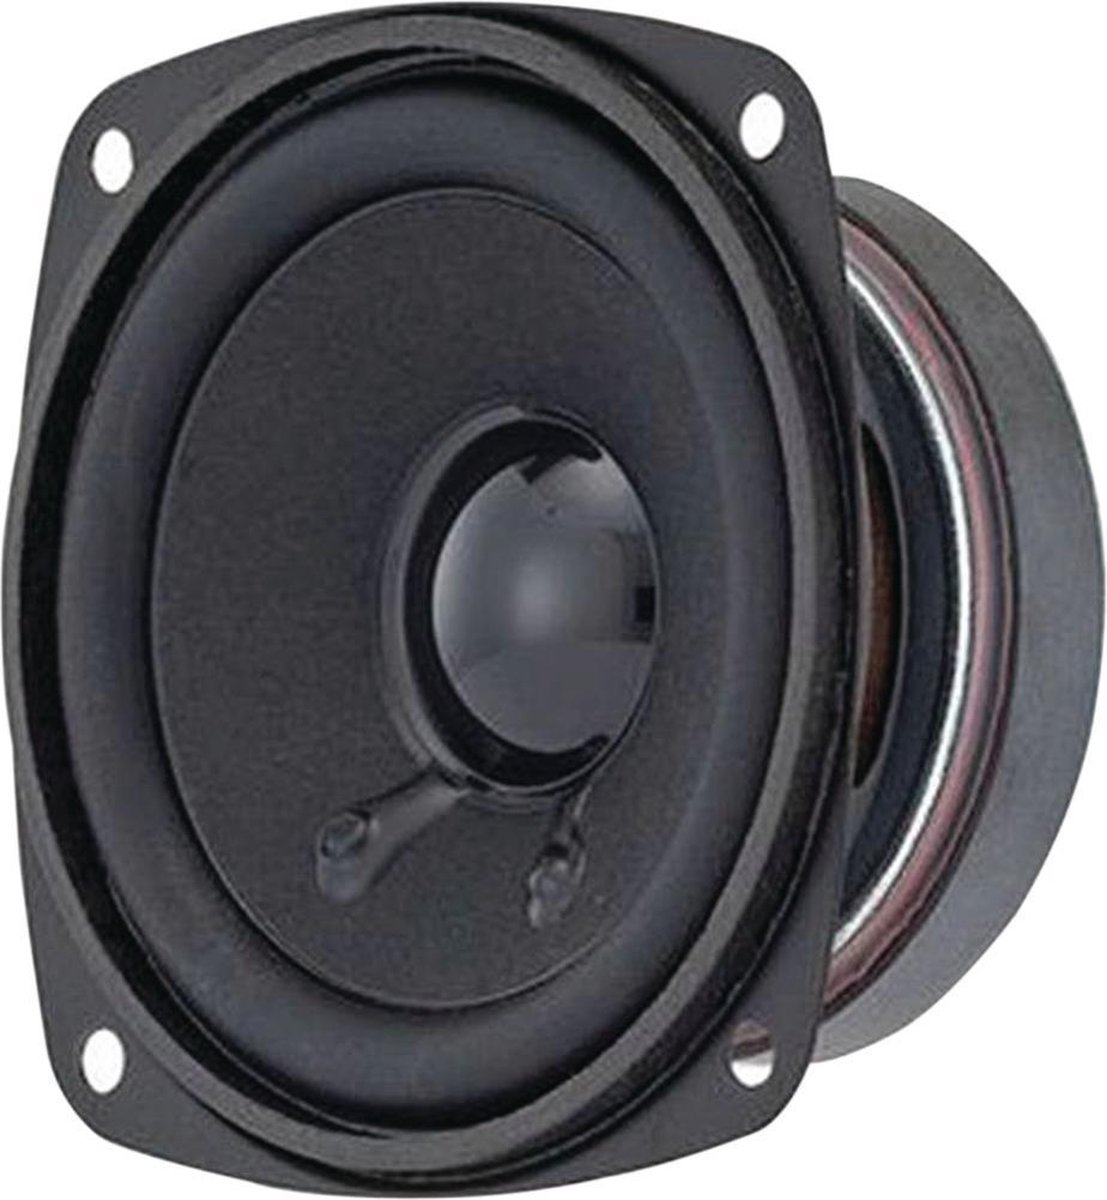 Visaton luidsprekers HiFi full-range luidspreker 8 cm (3.3